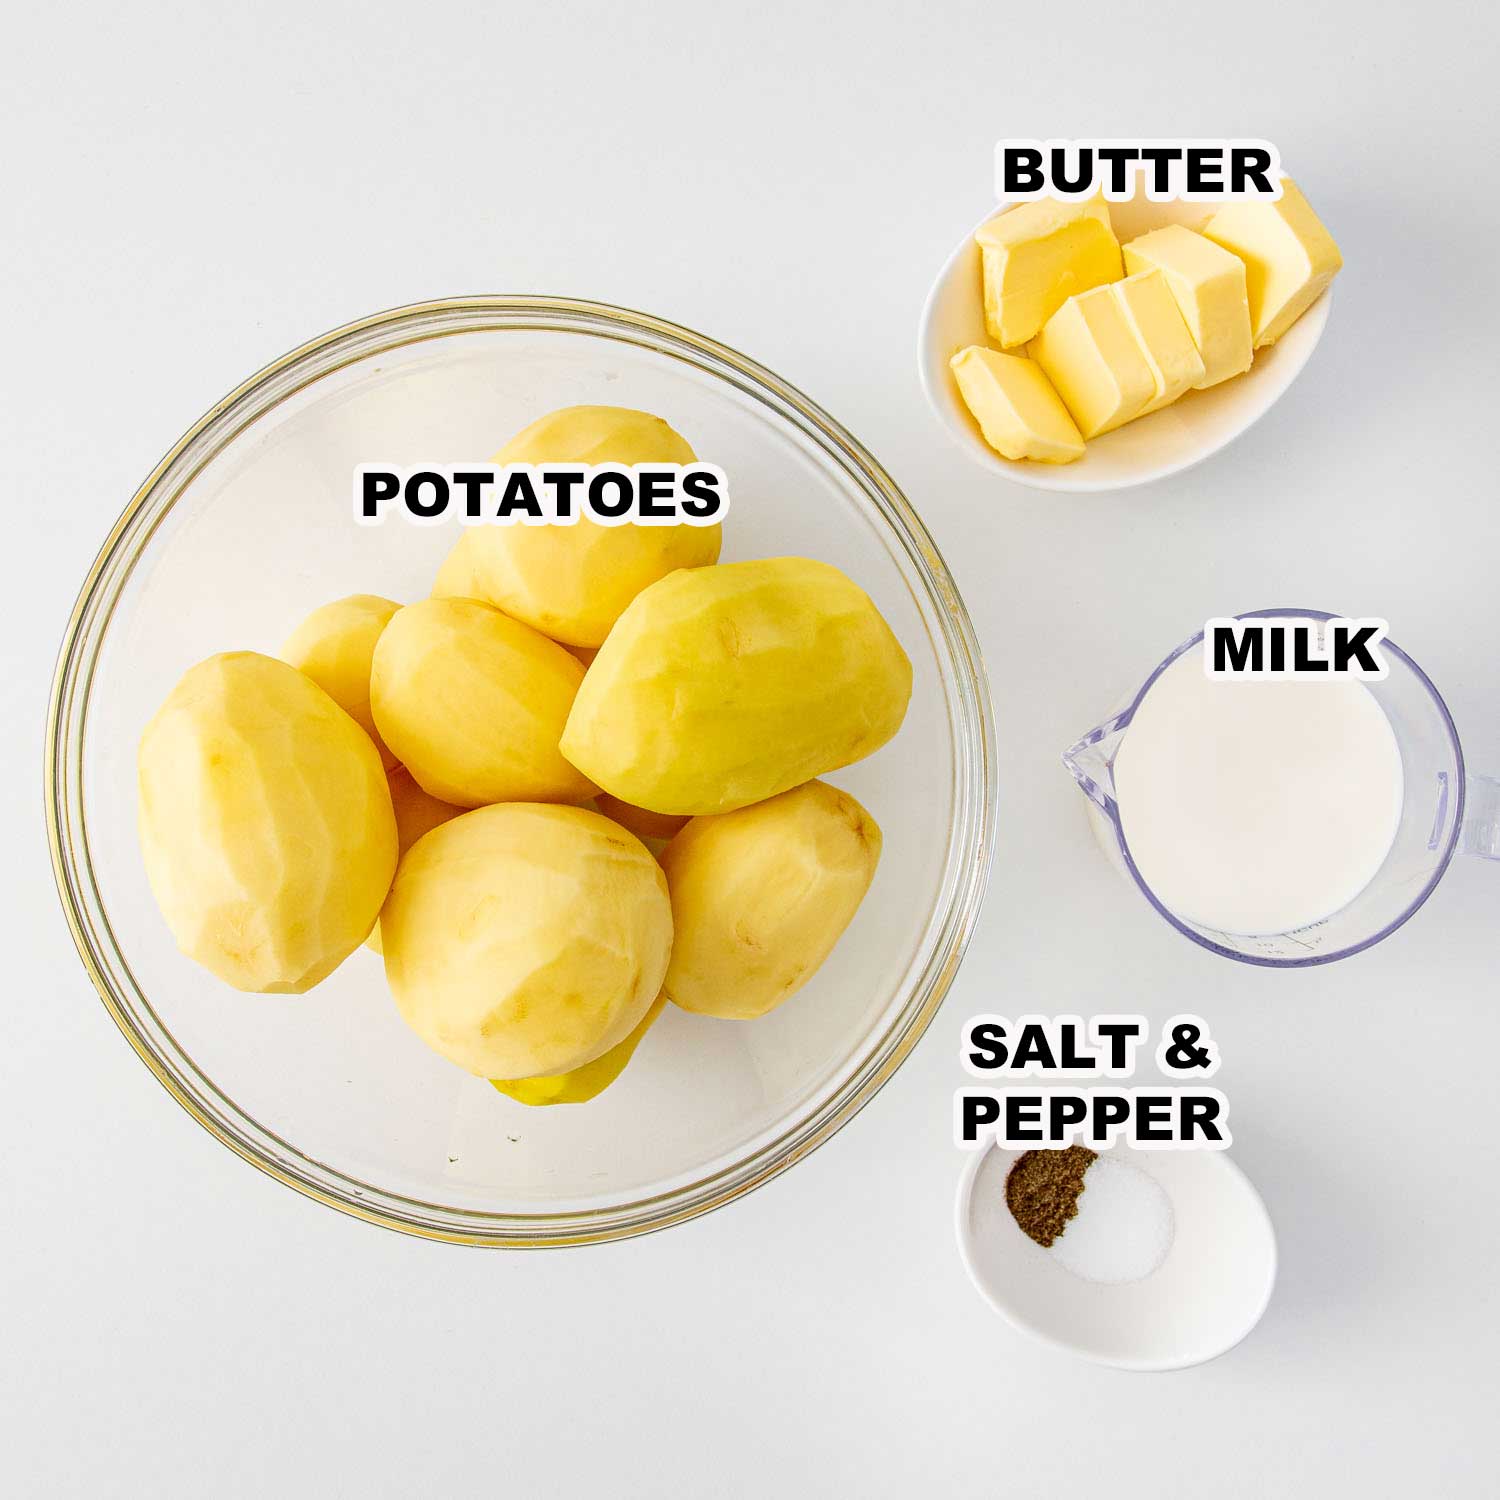 ingredients needed to make mashed potatoes.